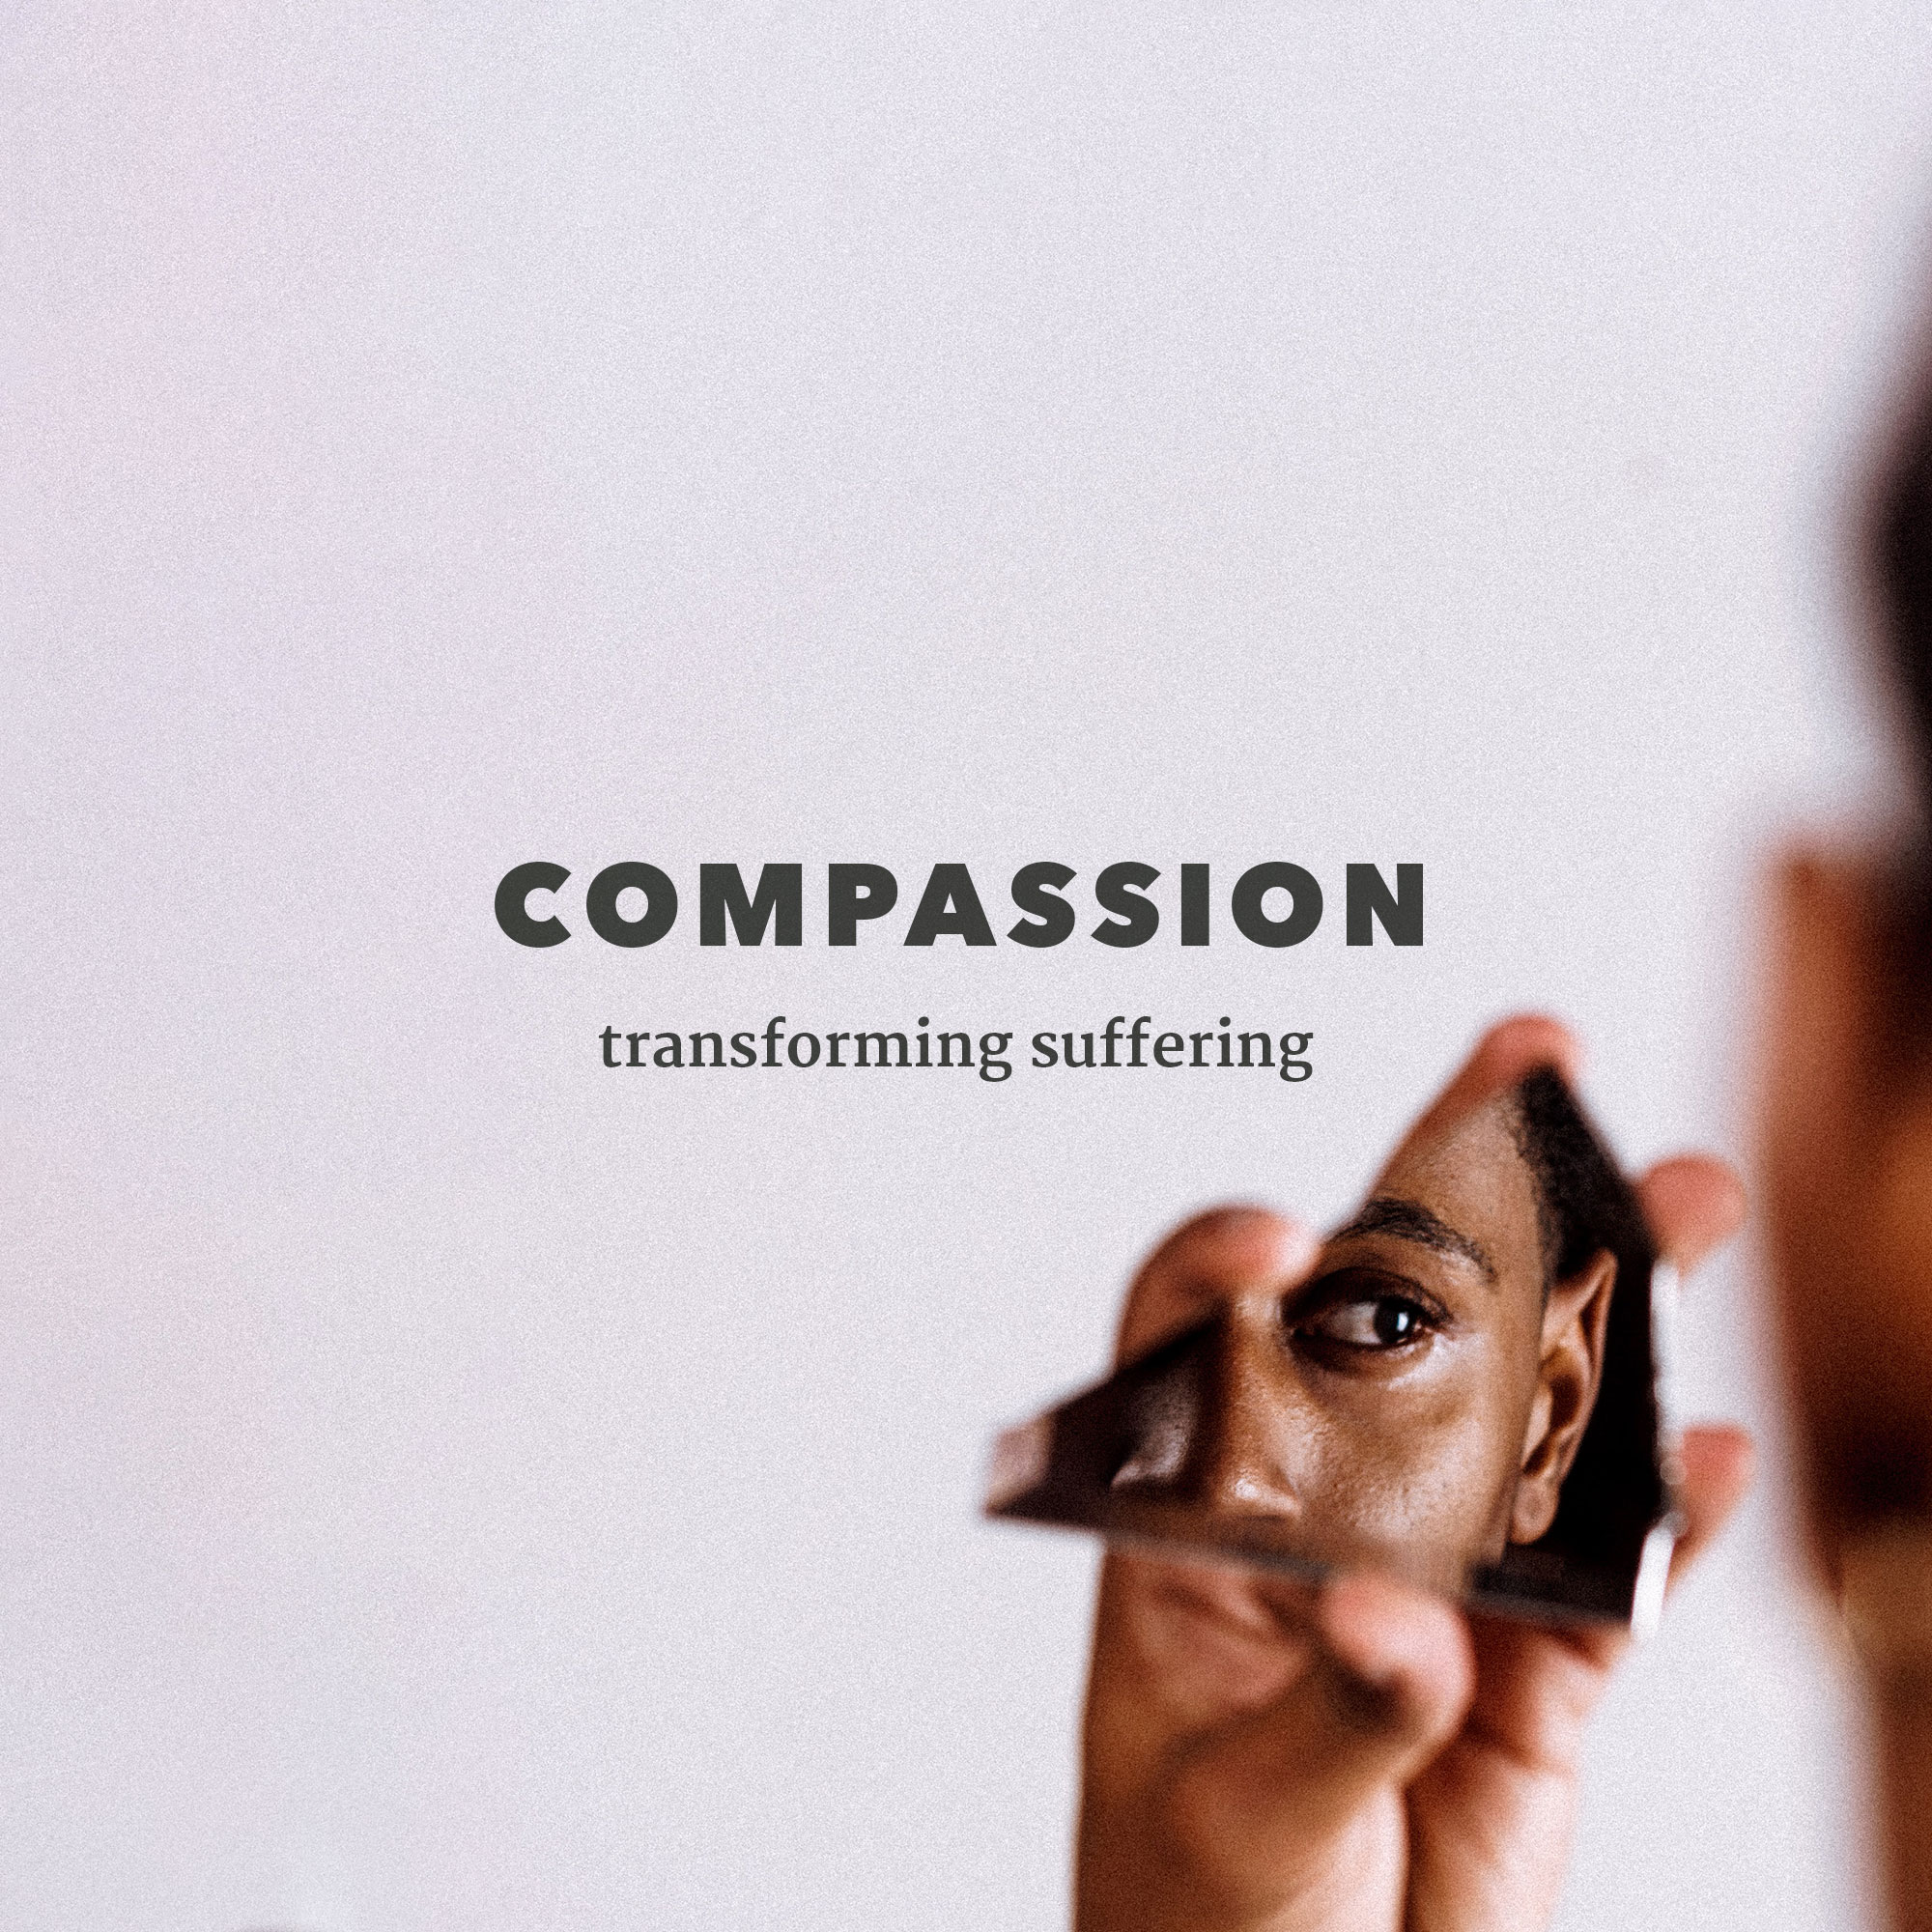 COMPASSIONATE - transforming suffering